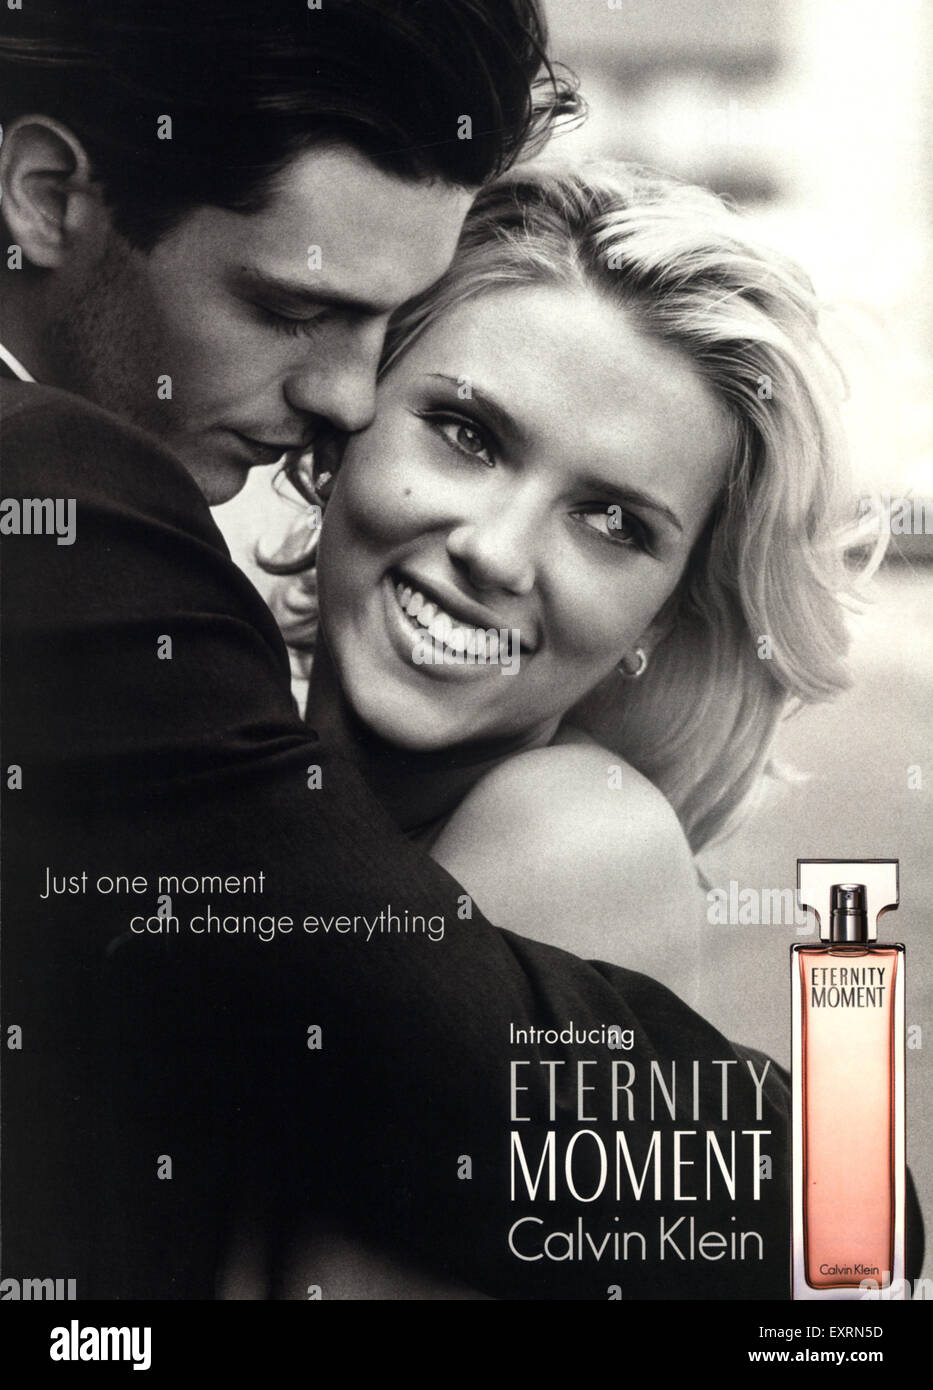 2000s USA Calvin Klein Eternity Moment Magazine Advert Stock Photo - Alamy